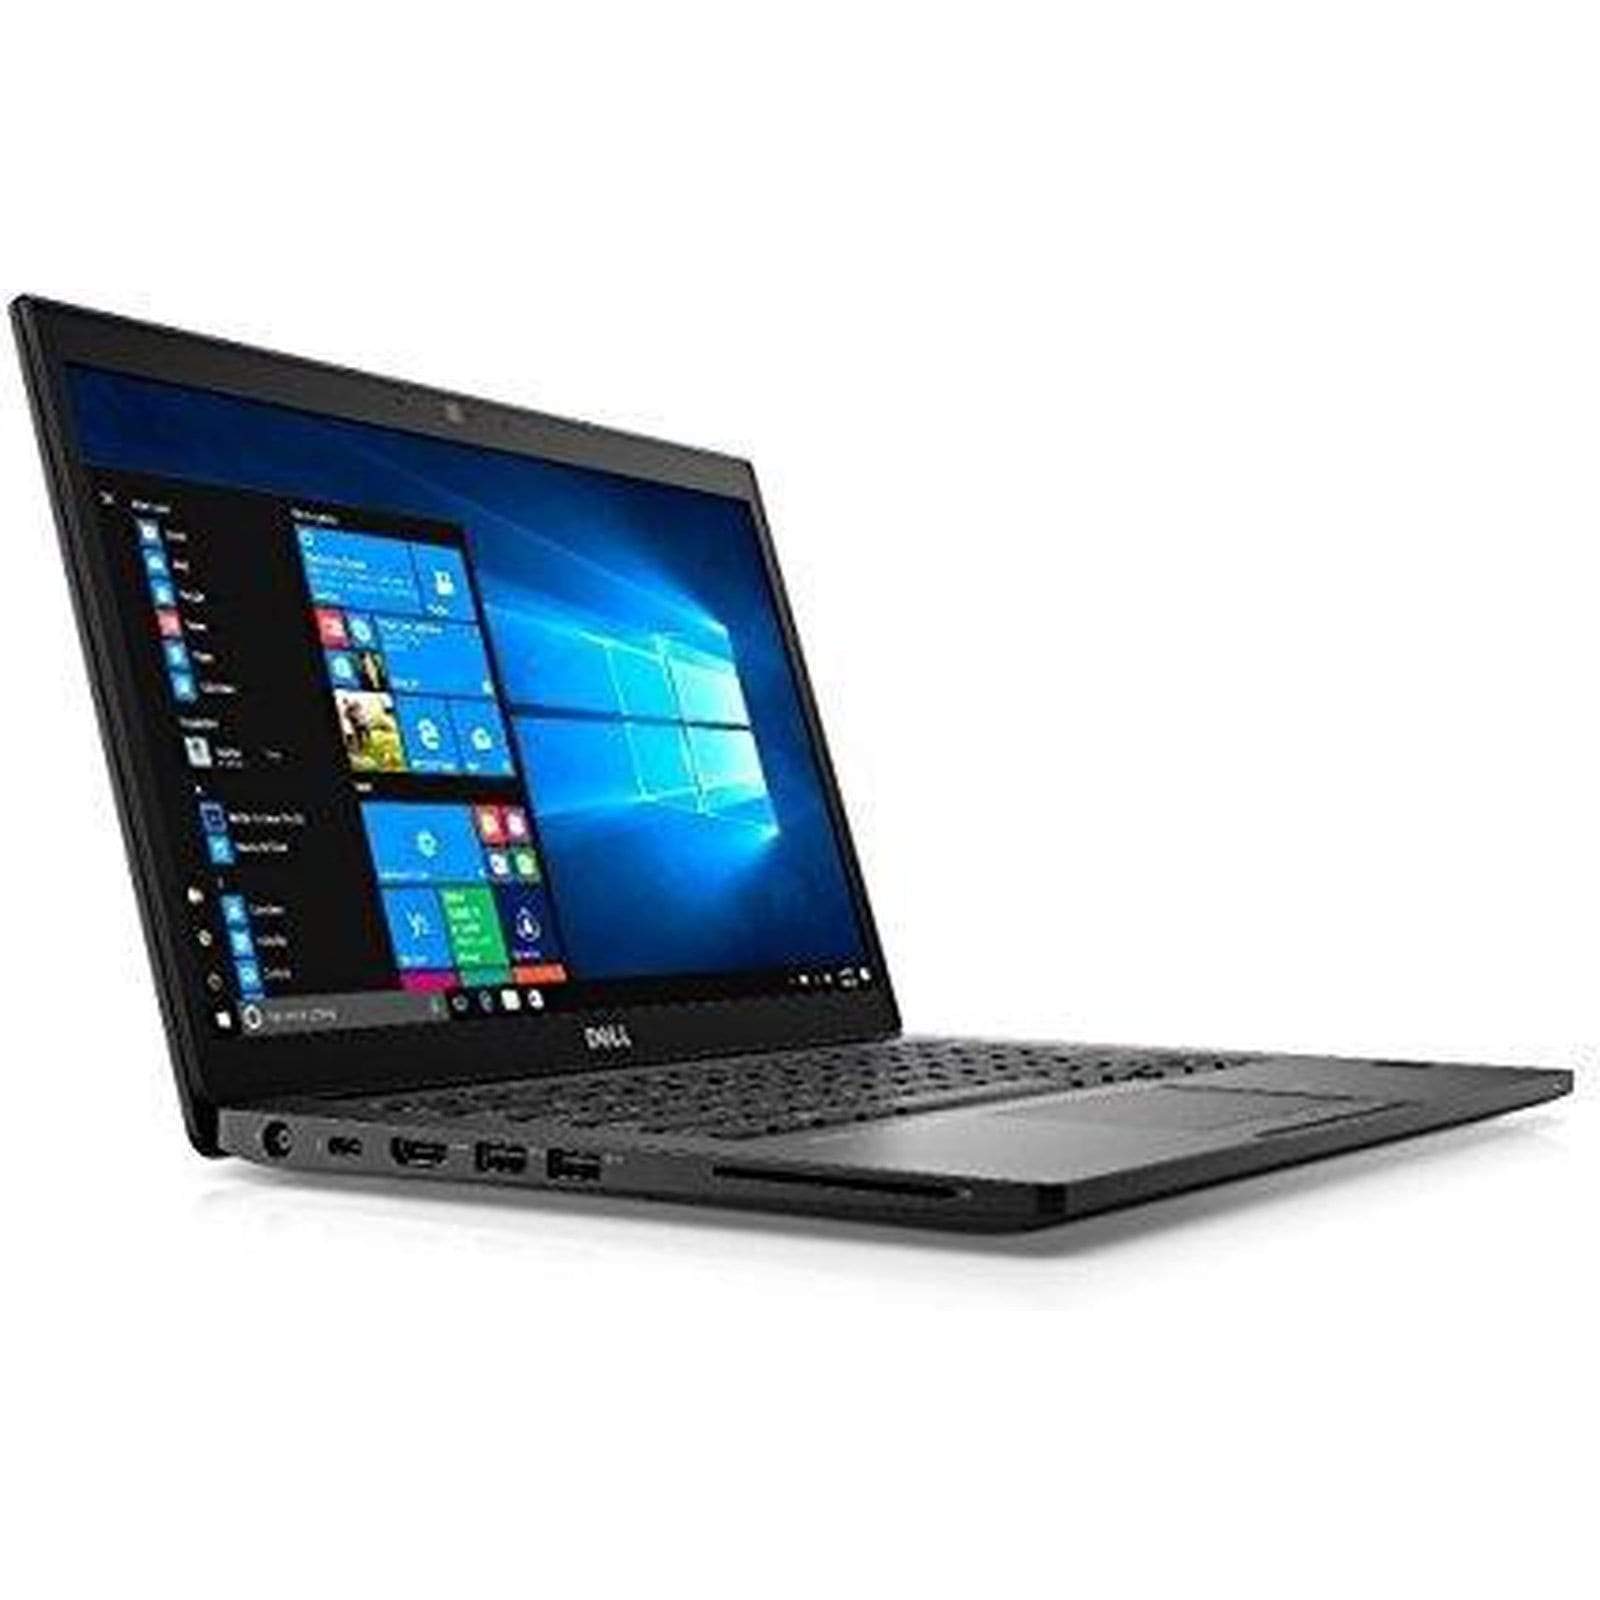 Dell Latitude 7480 Laptop 14 - Intel Core i5 6th Gen - i5-6300U - 3Ghz - 256GB SSD - 8GB RAM - 1920x1080 FHD - Windows 10 Pro